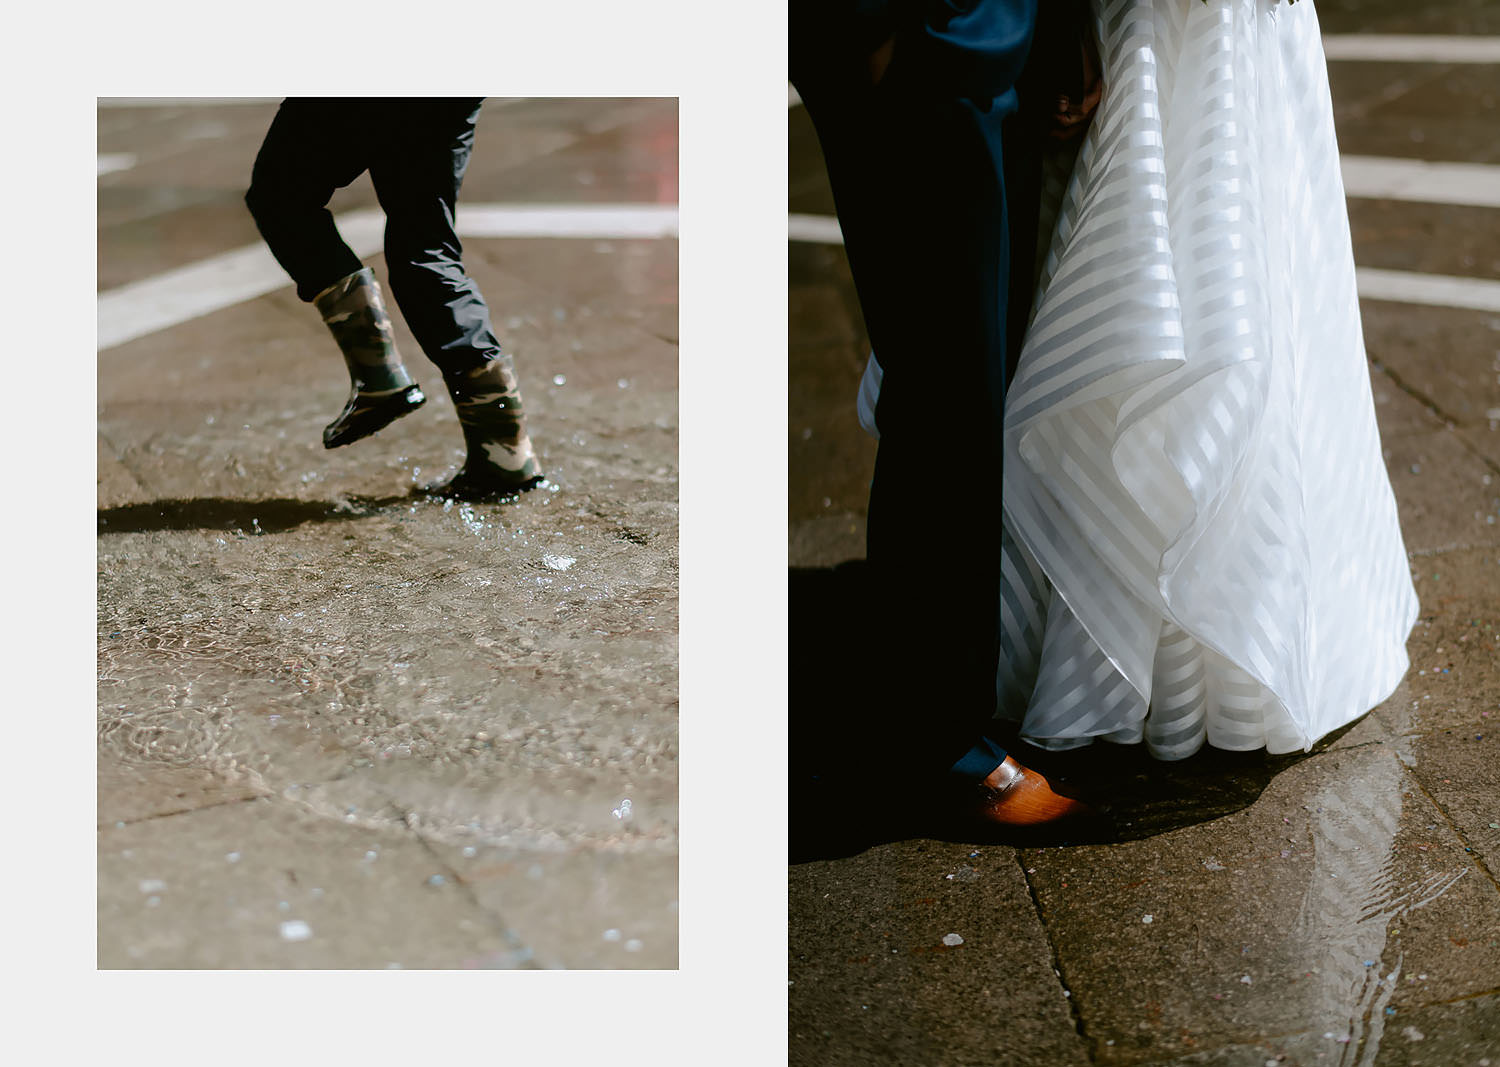 wedding photographer venice elopement photography bride groom walk piazza san marco